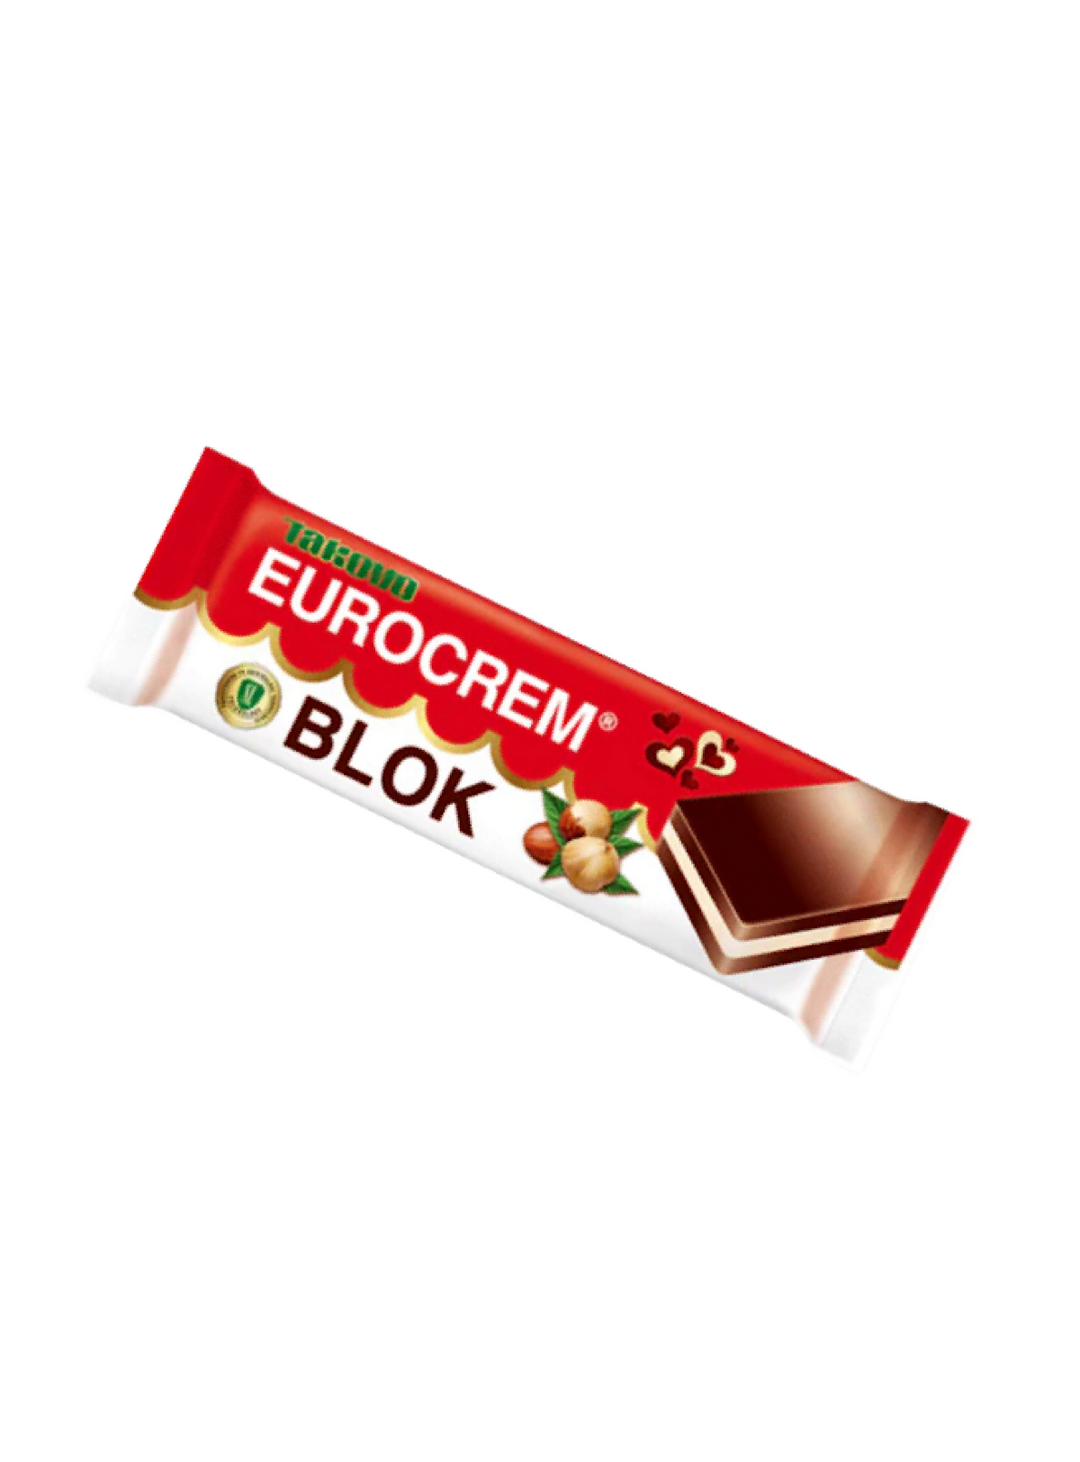 Eurocream Blok Chocolate Bar - Takovo - 50g